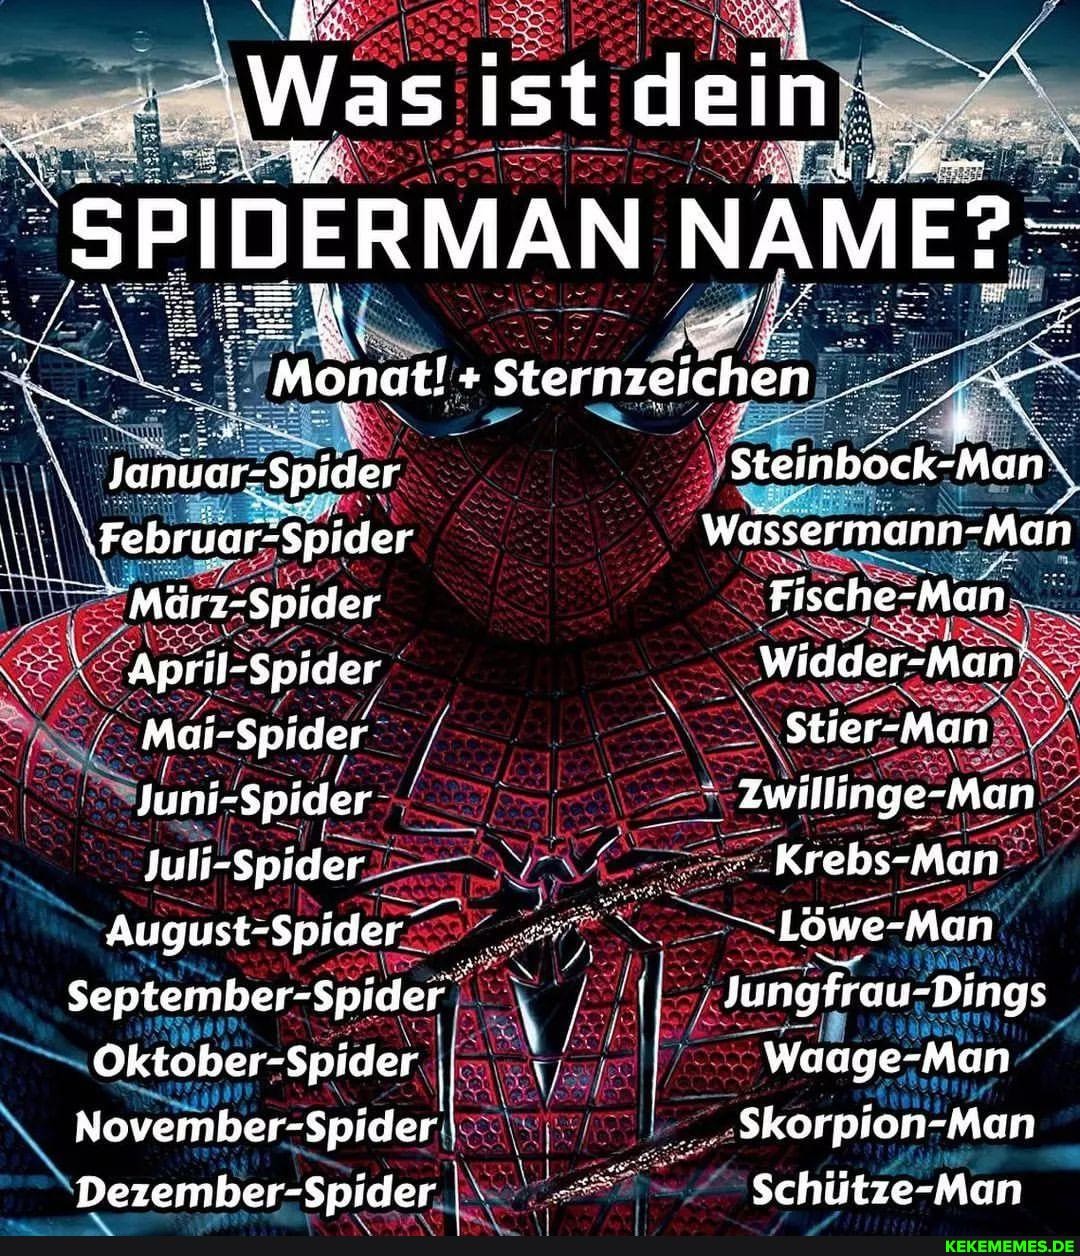 ASS Mai-Spider August-Spider September spiders Dezember-Spider.I~